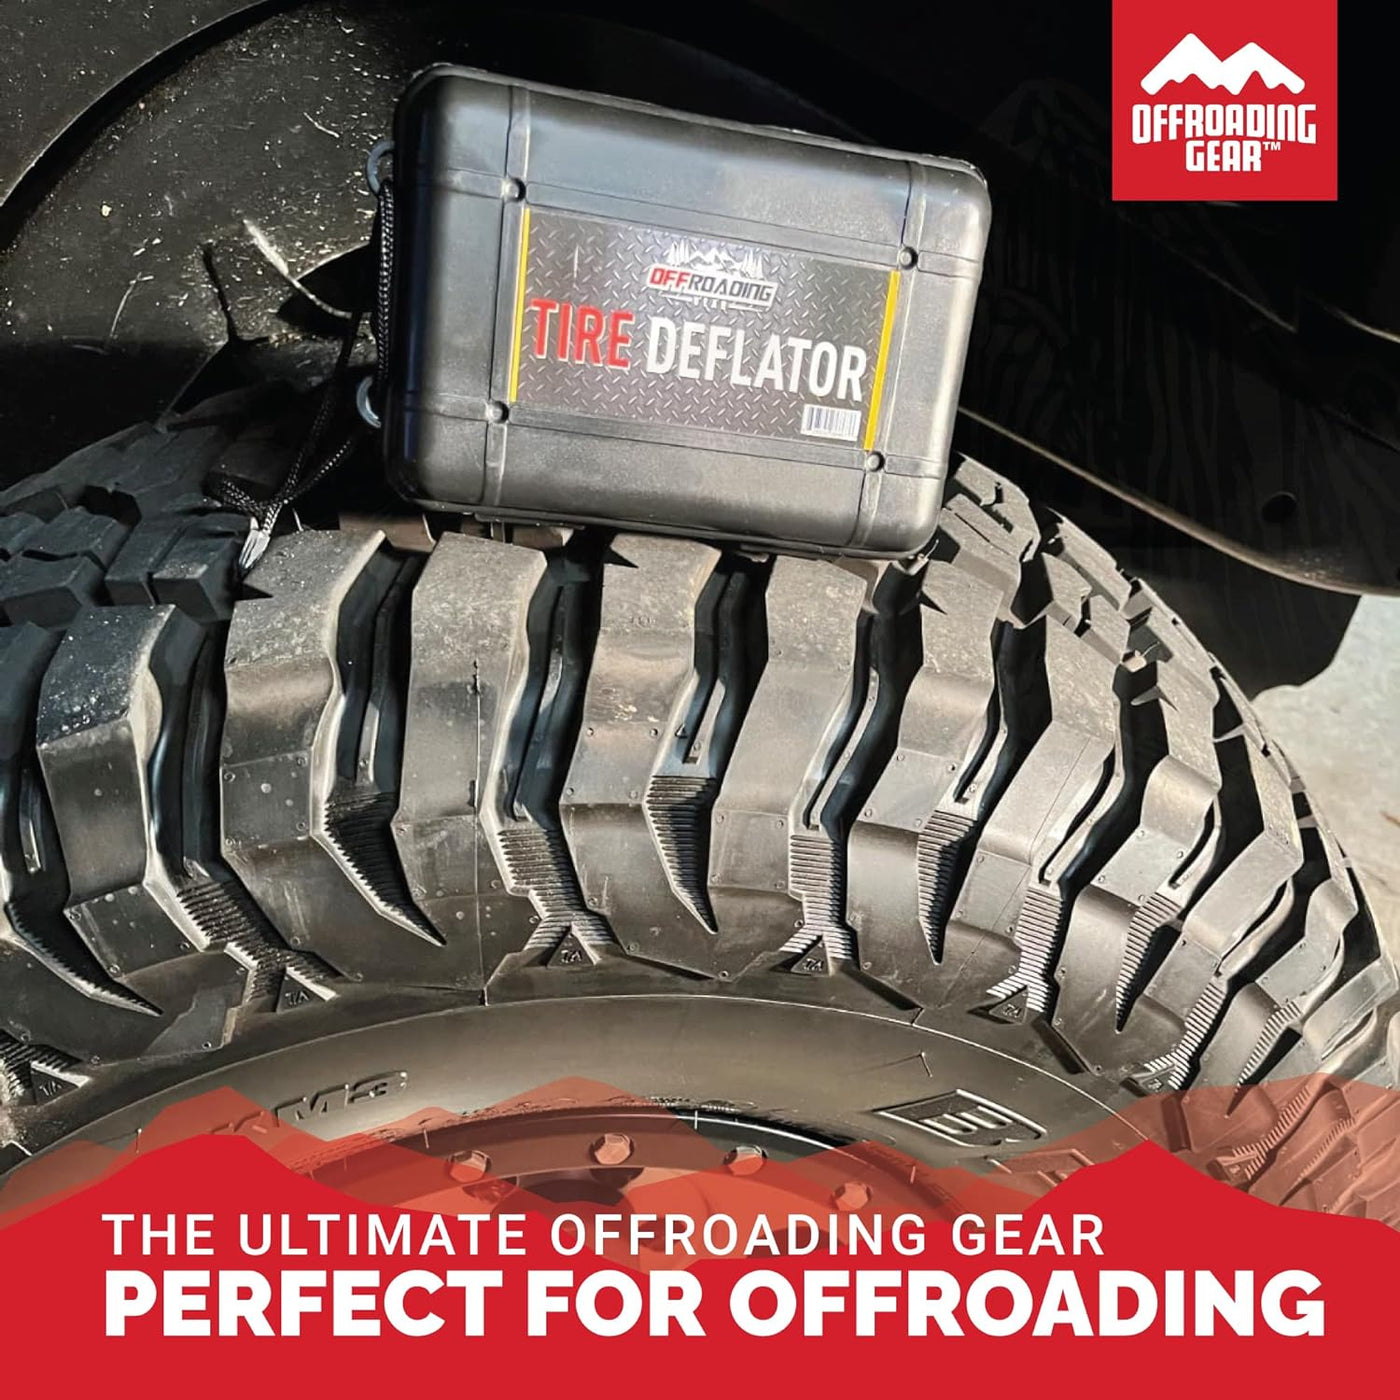 Offroading Gear Rapid Tire Deflator Kit, 0 to 70 PSI, with Pressure Gauge, Heavy Duty